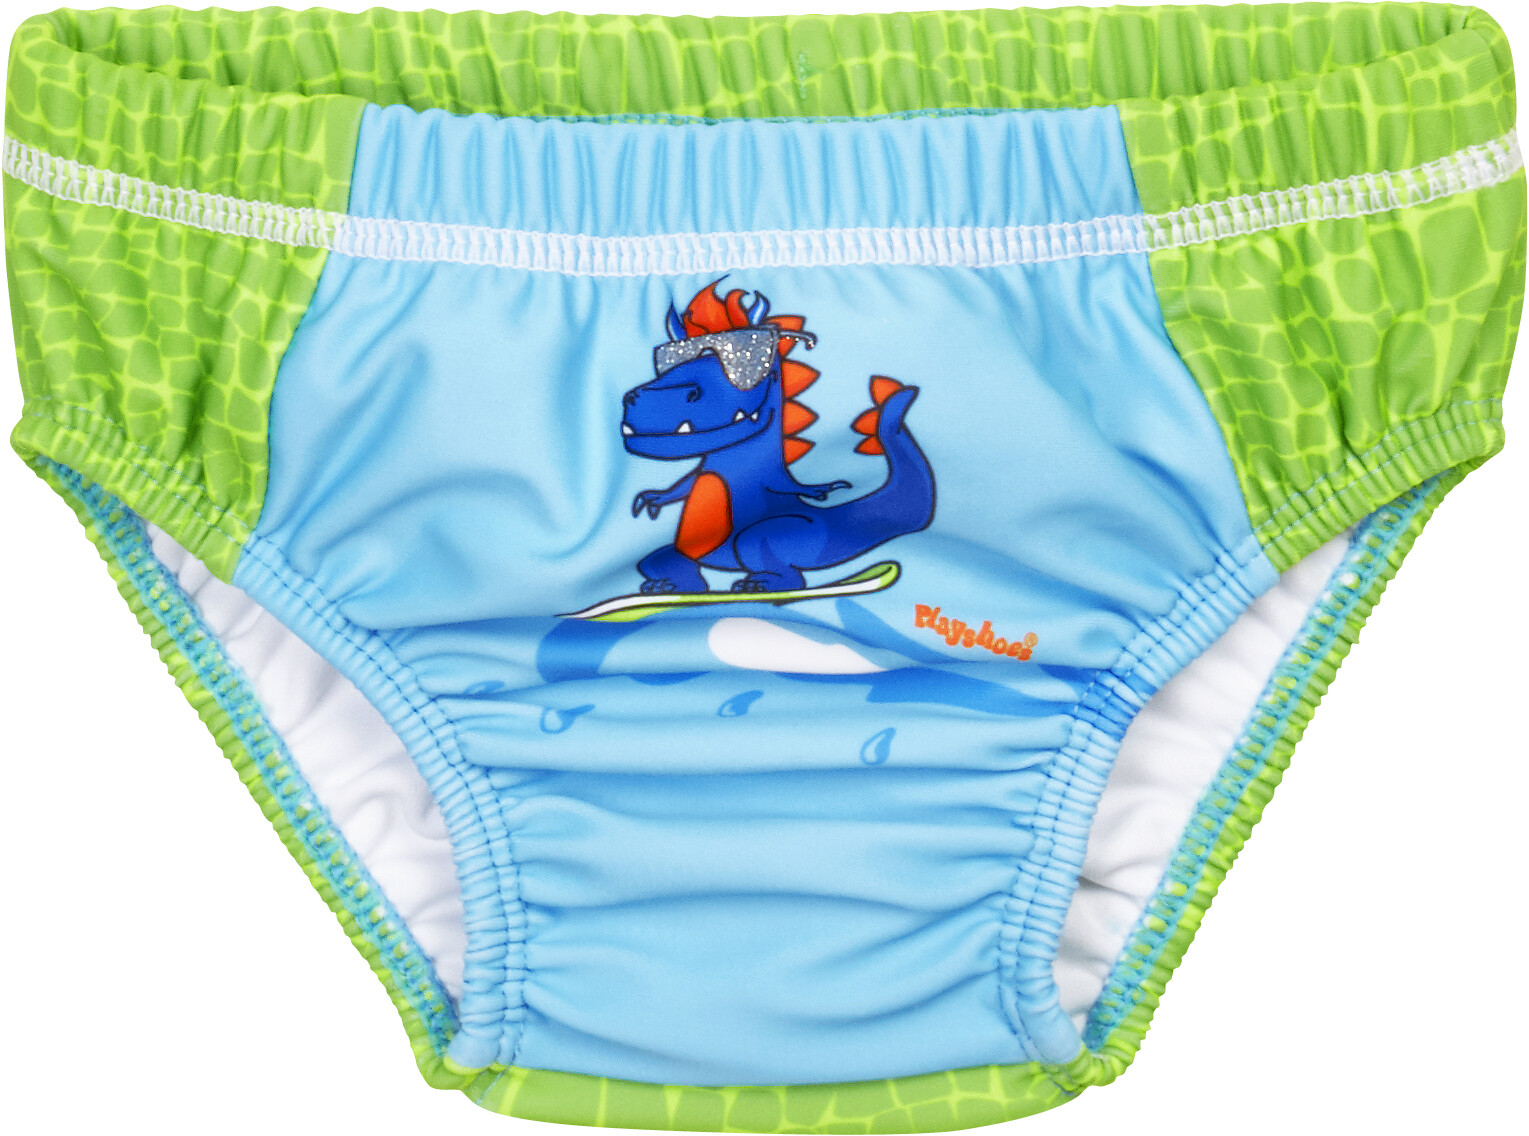 Playshoes - UV swim diaper for babies - Washable - Dino - Green/Lightblue